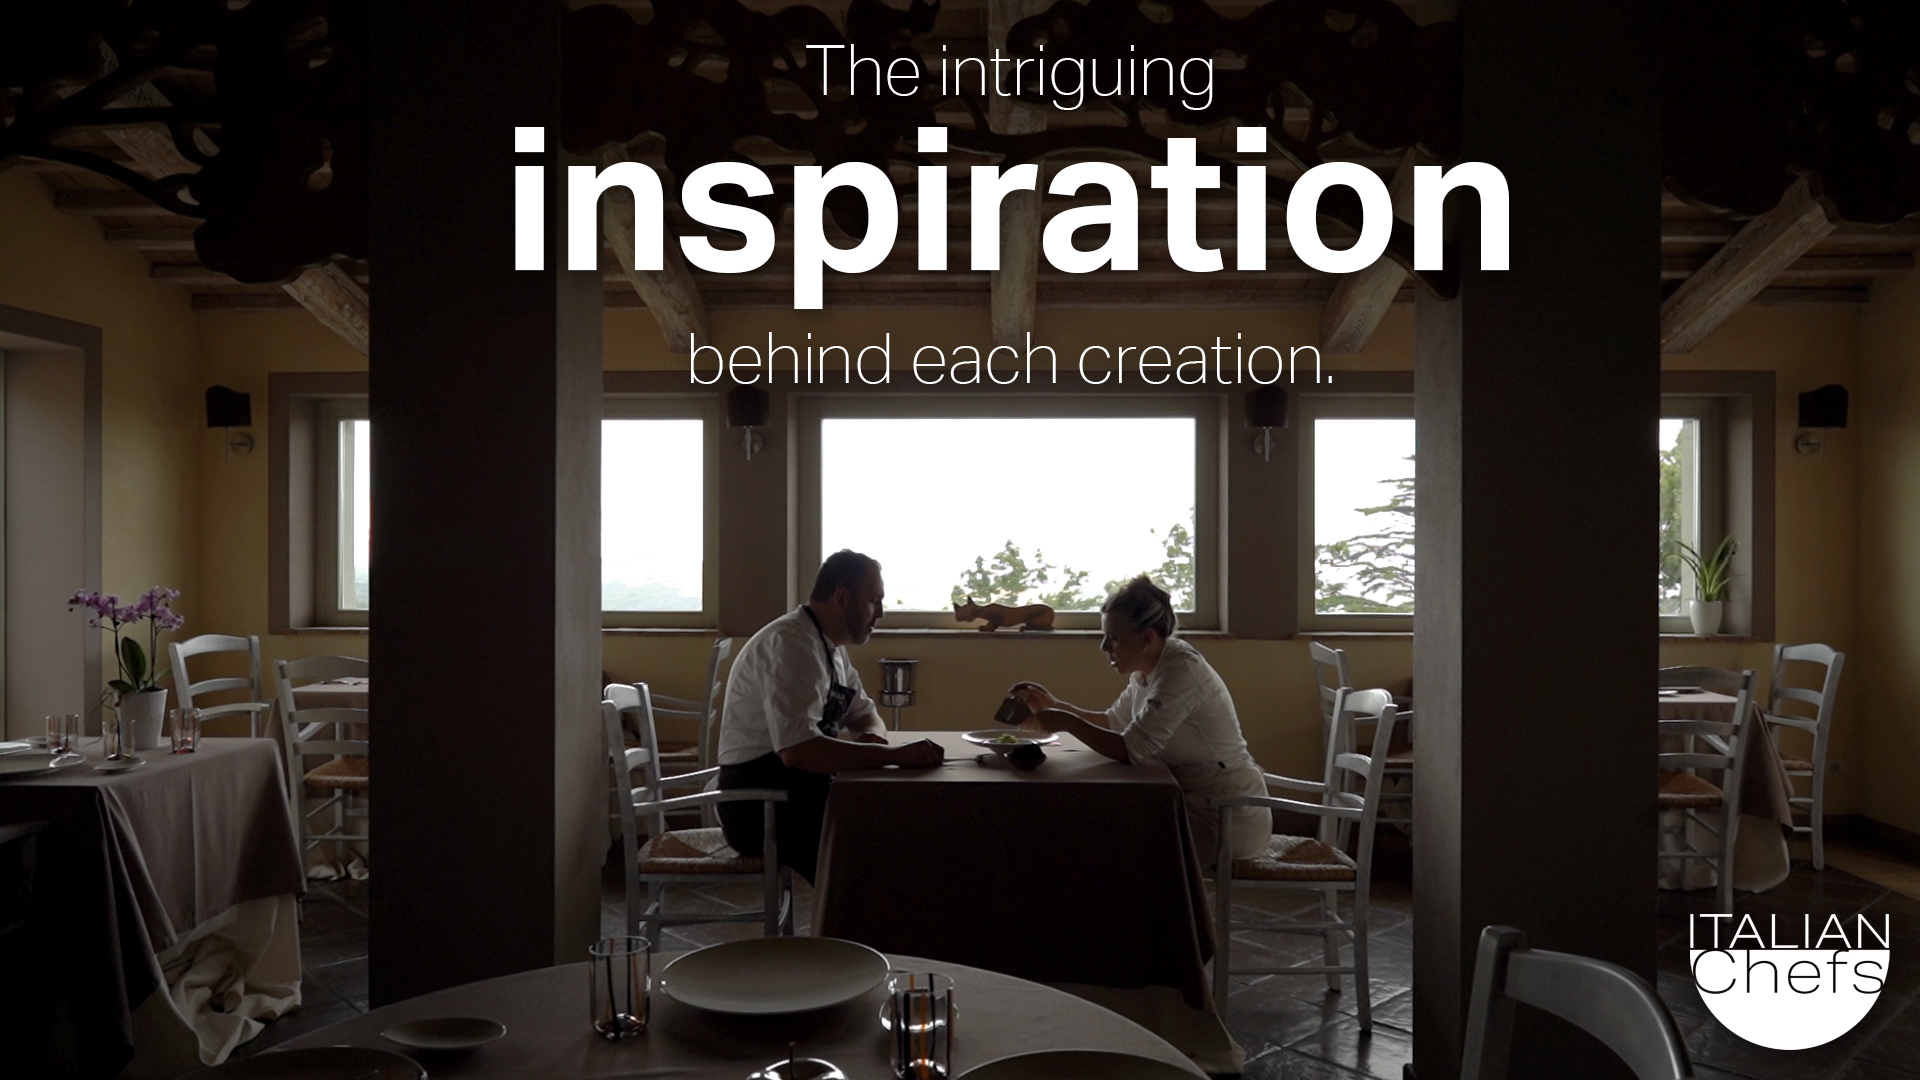 Documentary series Italian Chefs - Inspiration